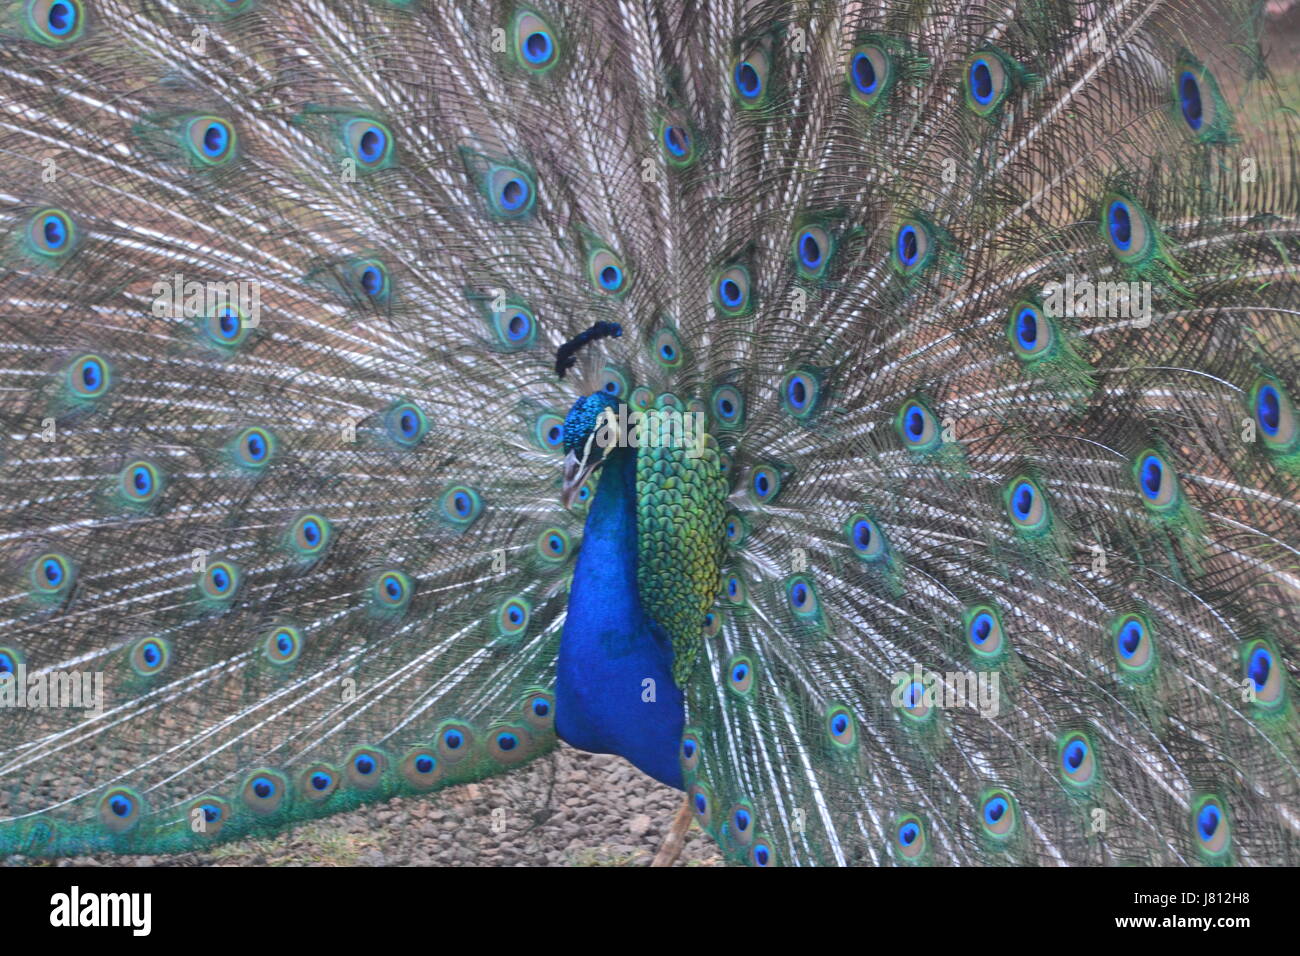 Peacock on display Stock Photo